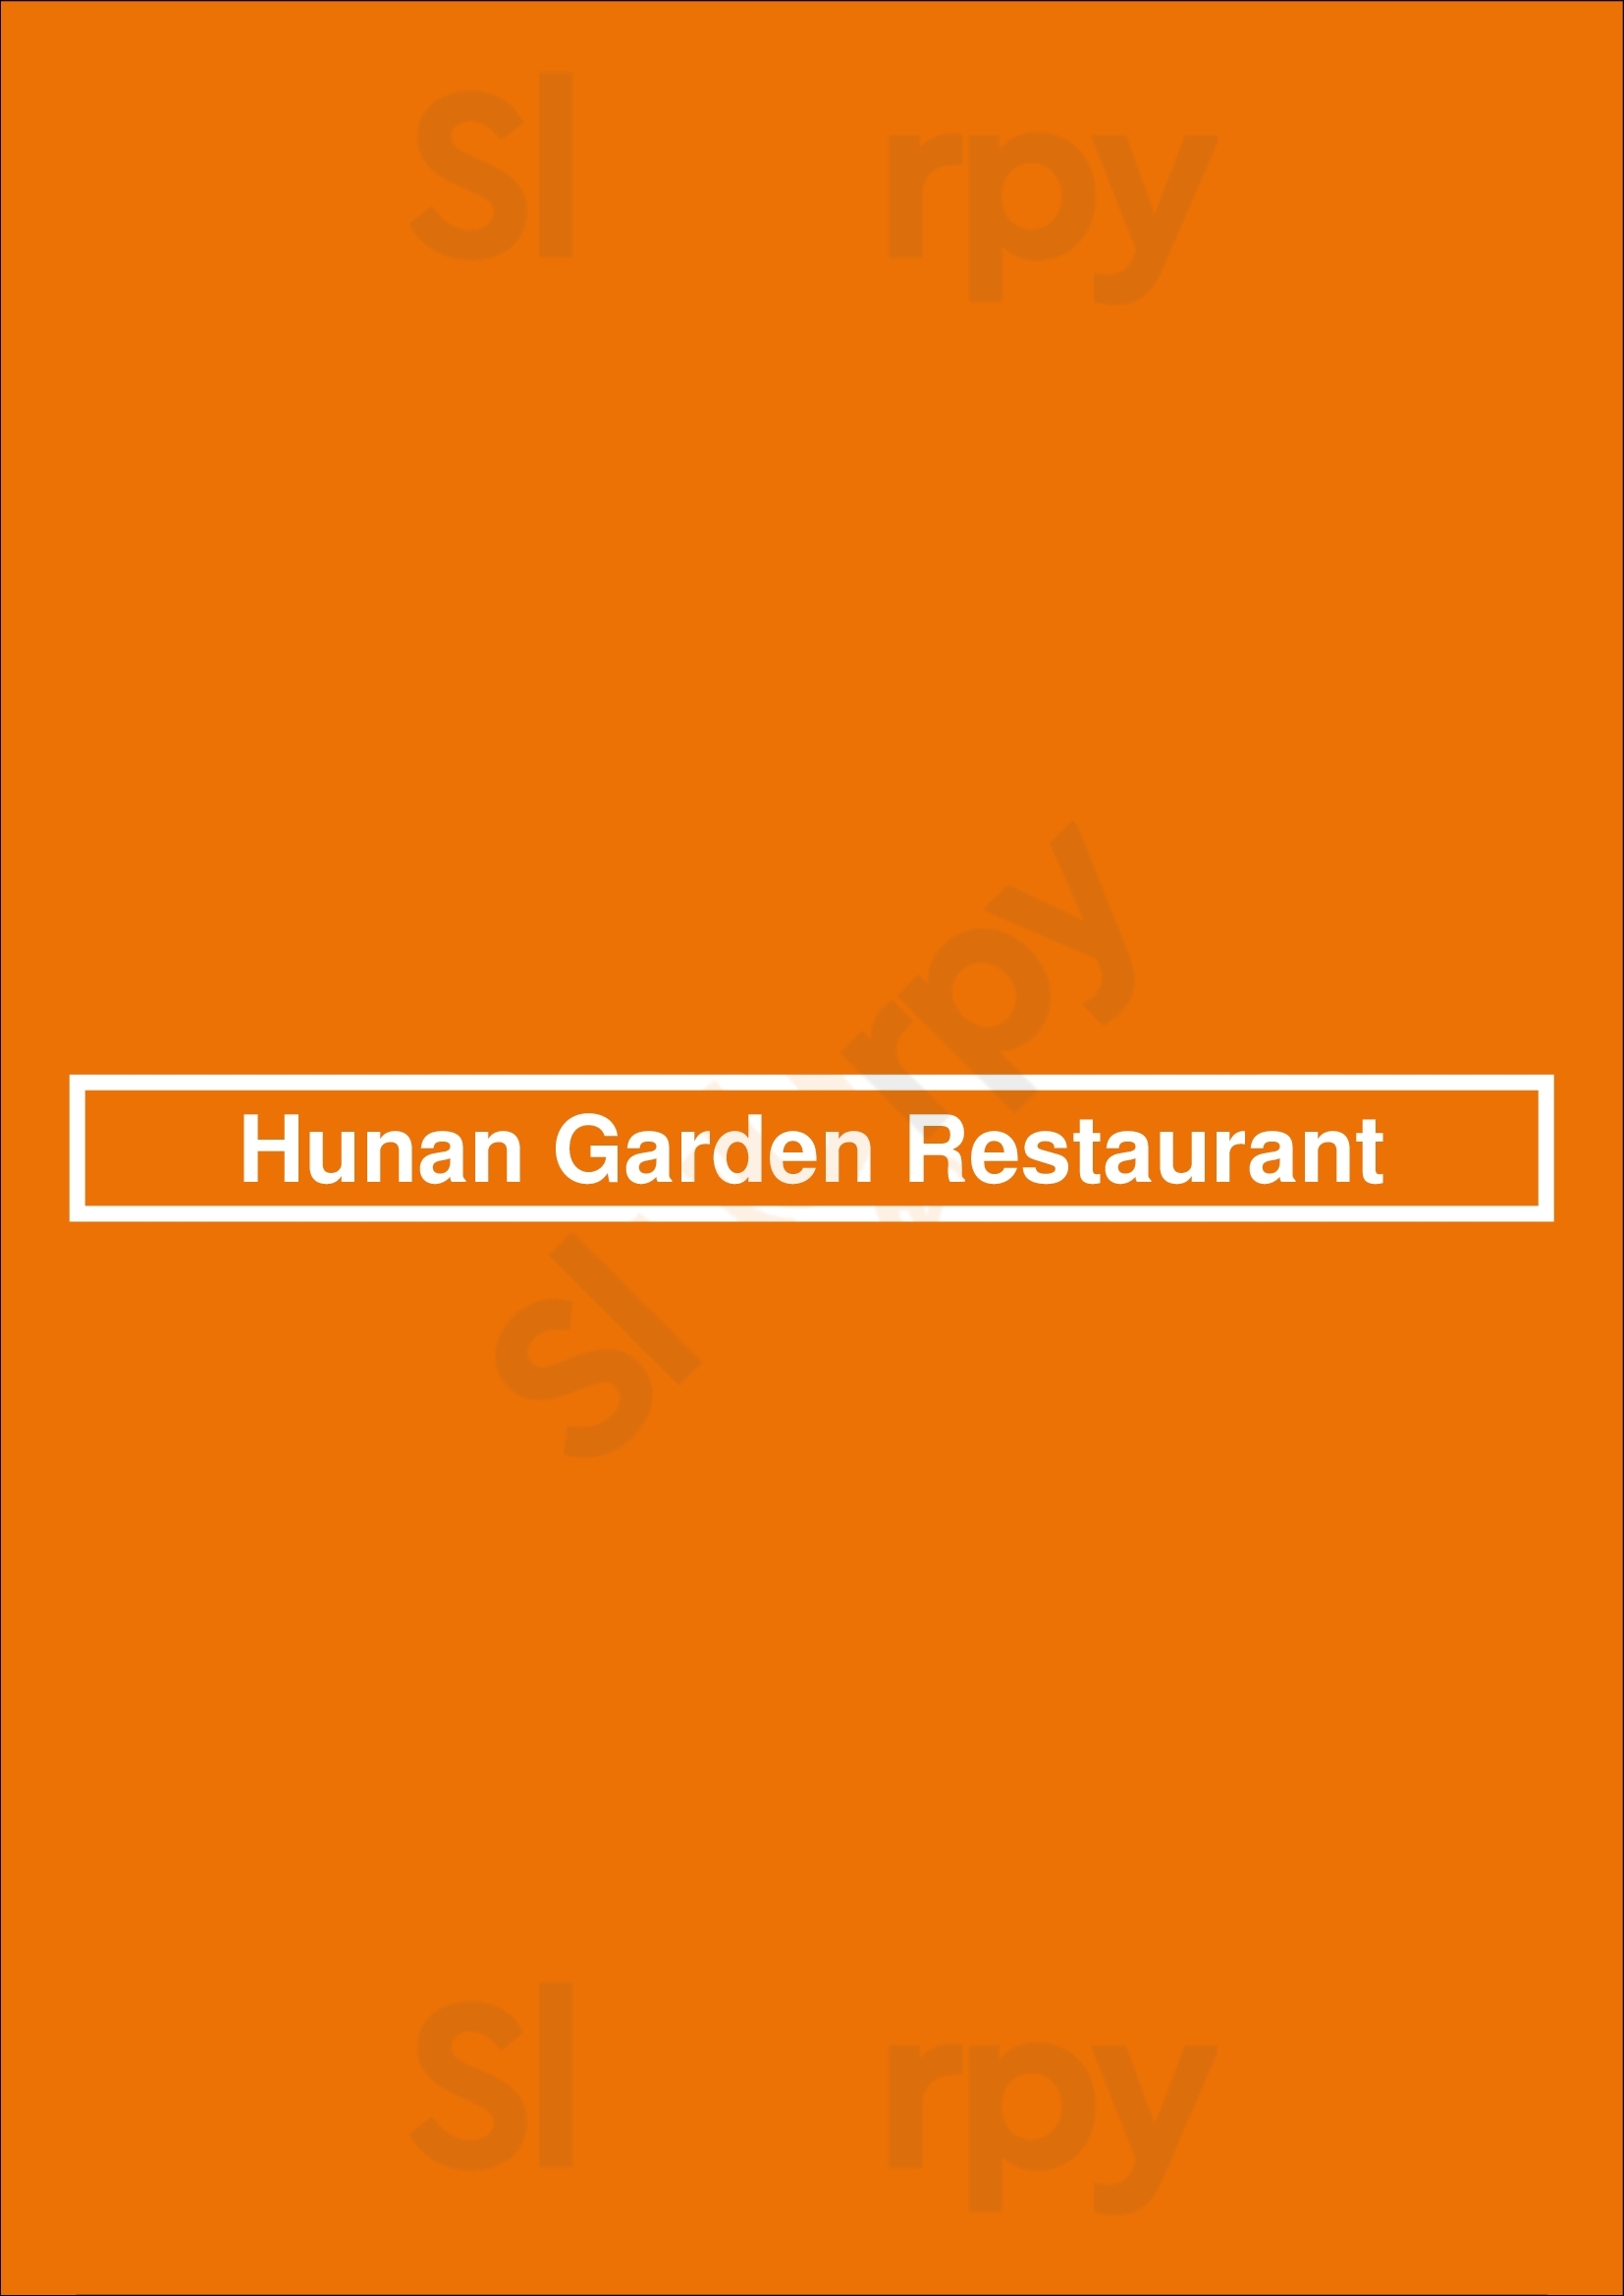 Hunan Garden Restaurant Houston Menu - 1